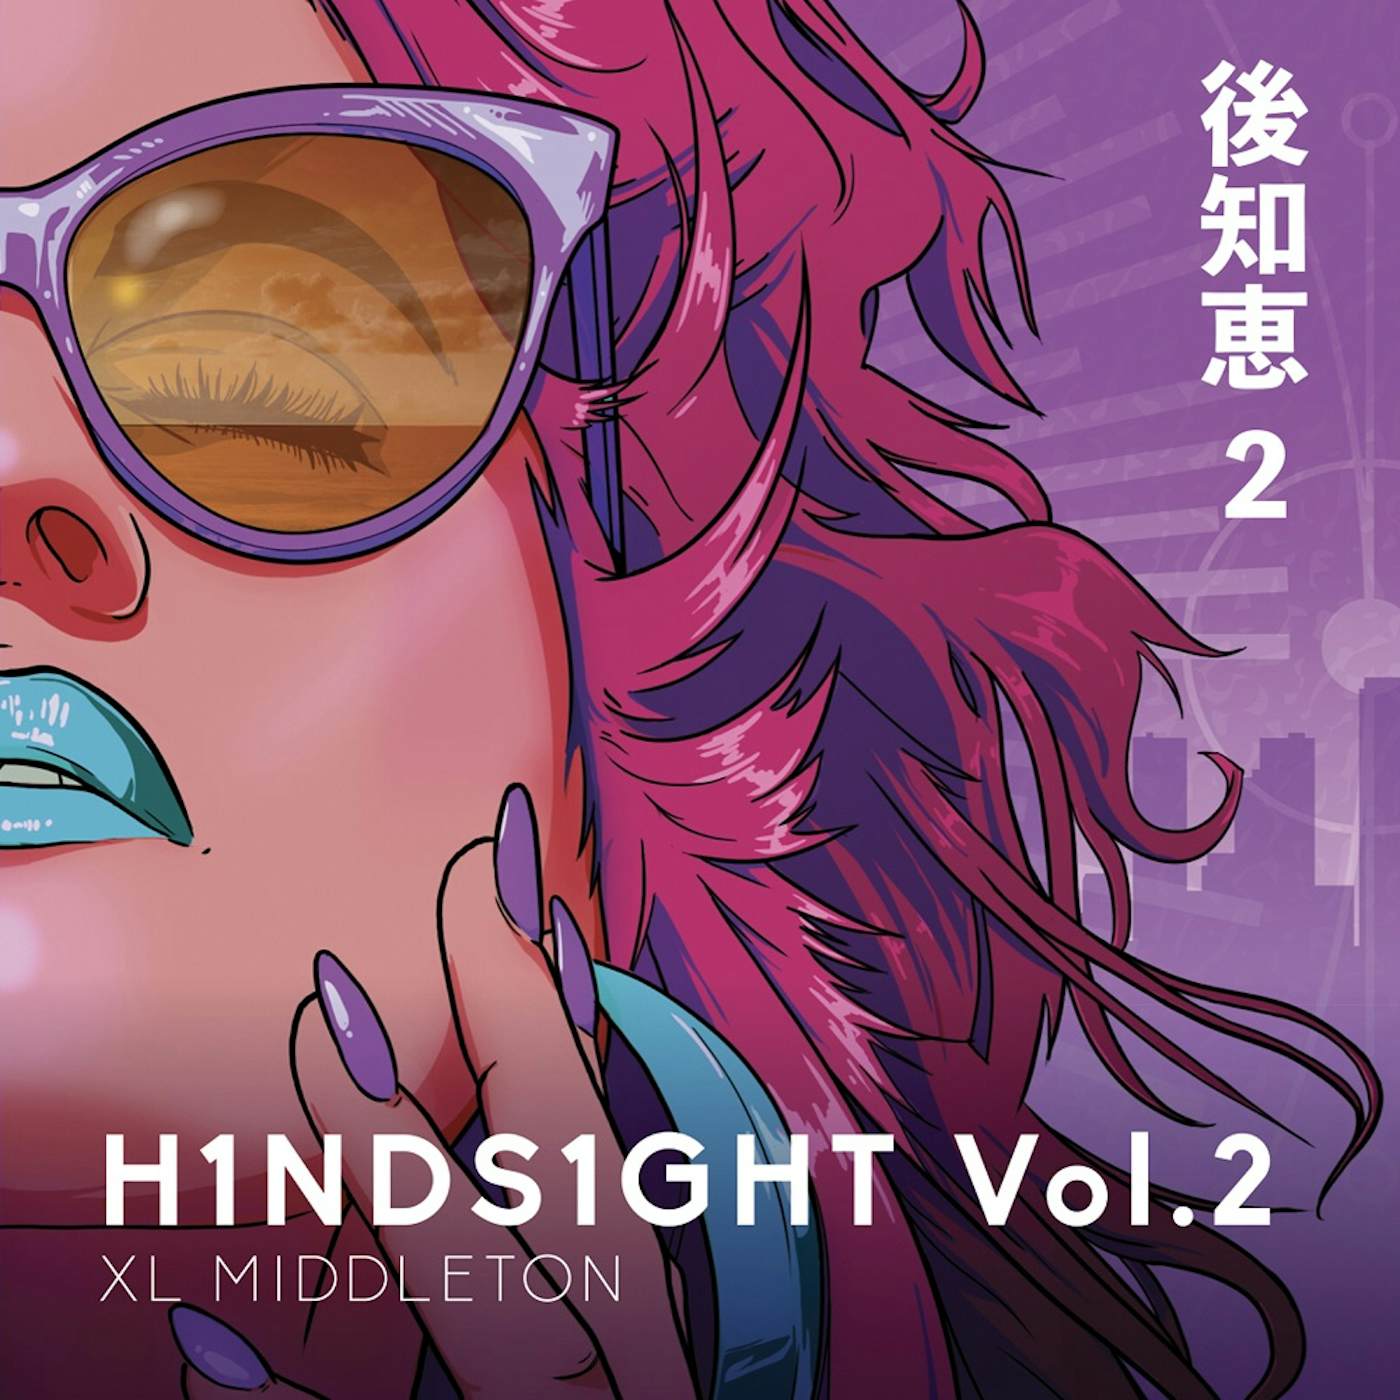 XL Middleton H1NDS1GHT VOL. 2 Vinyl Record